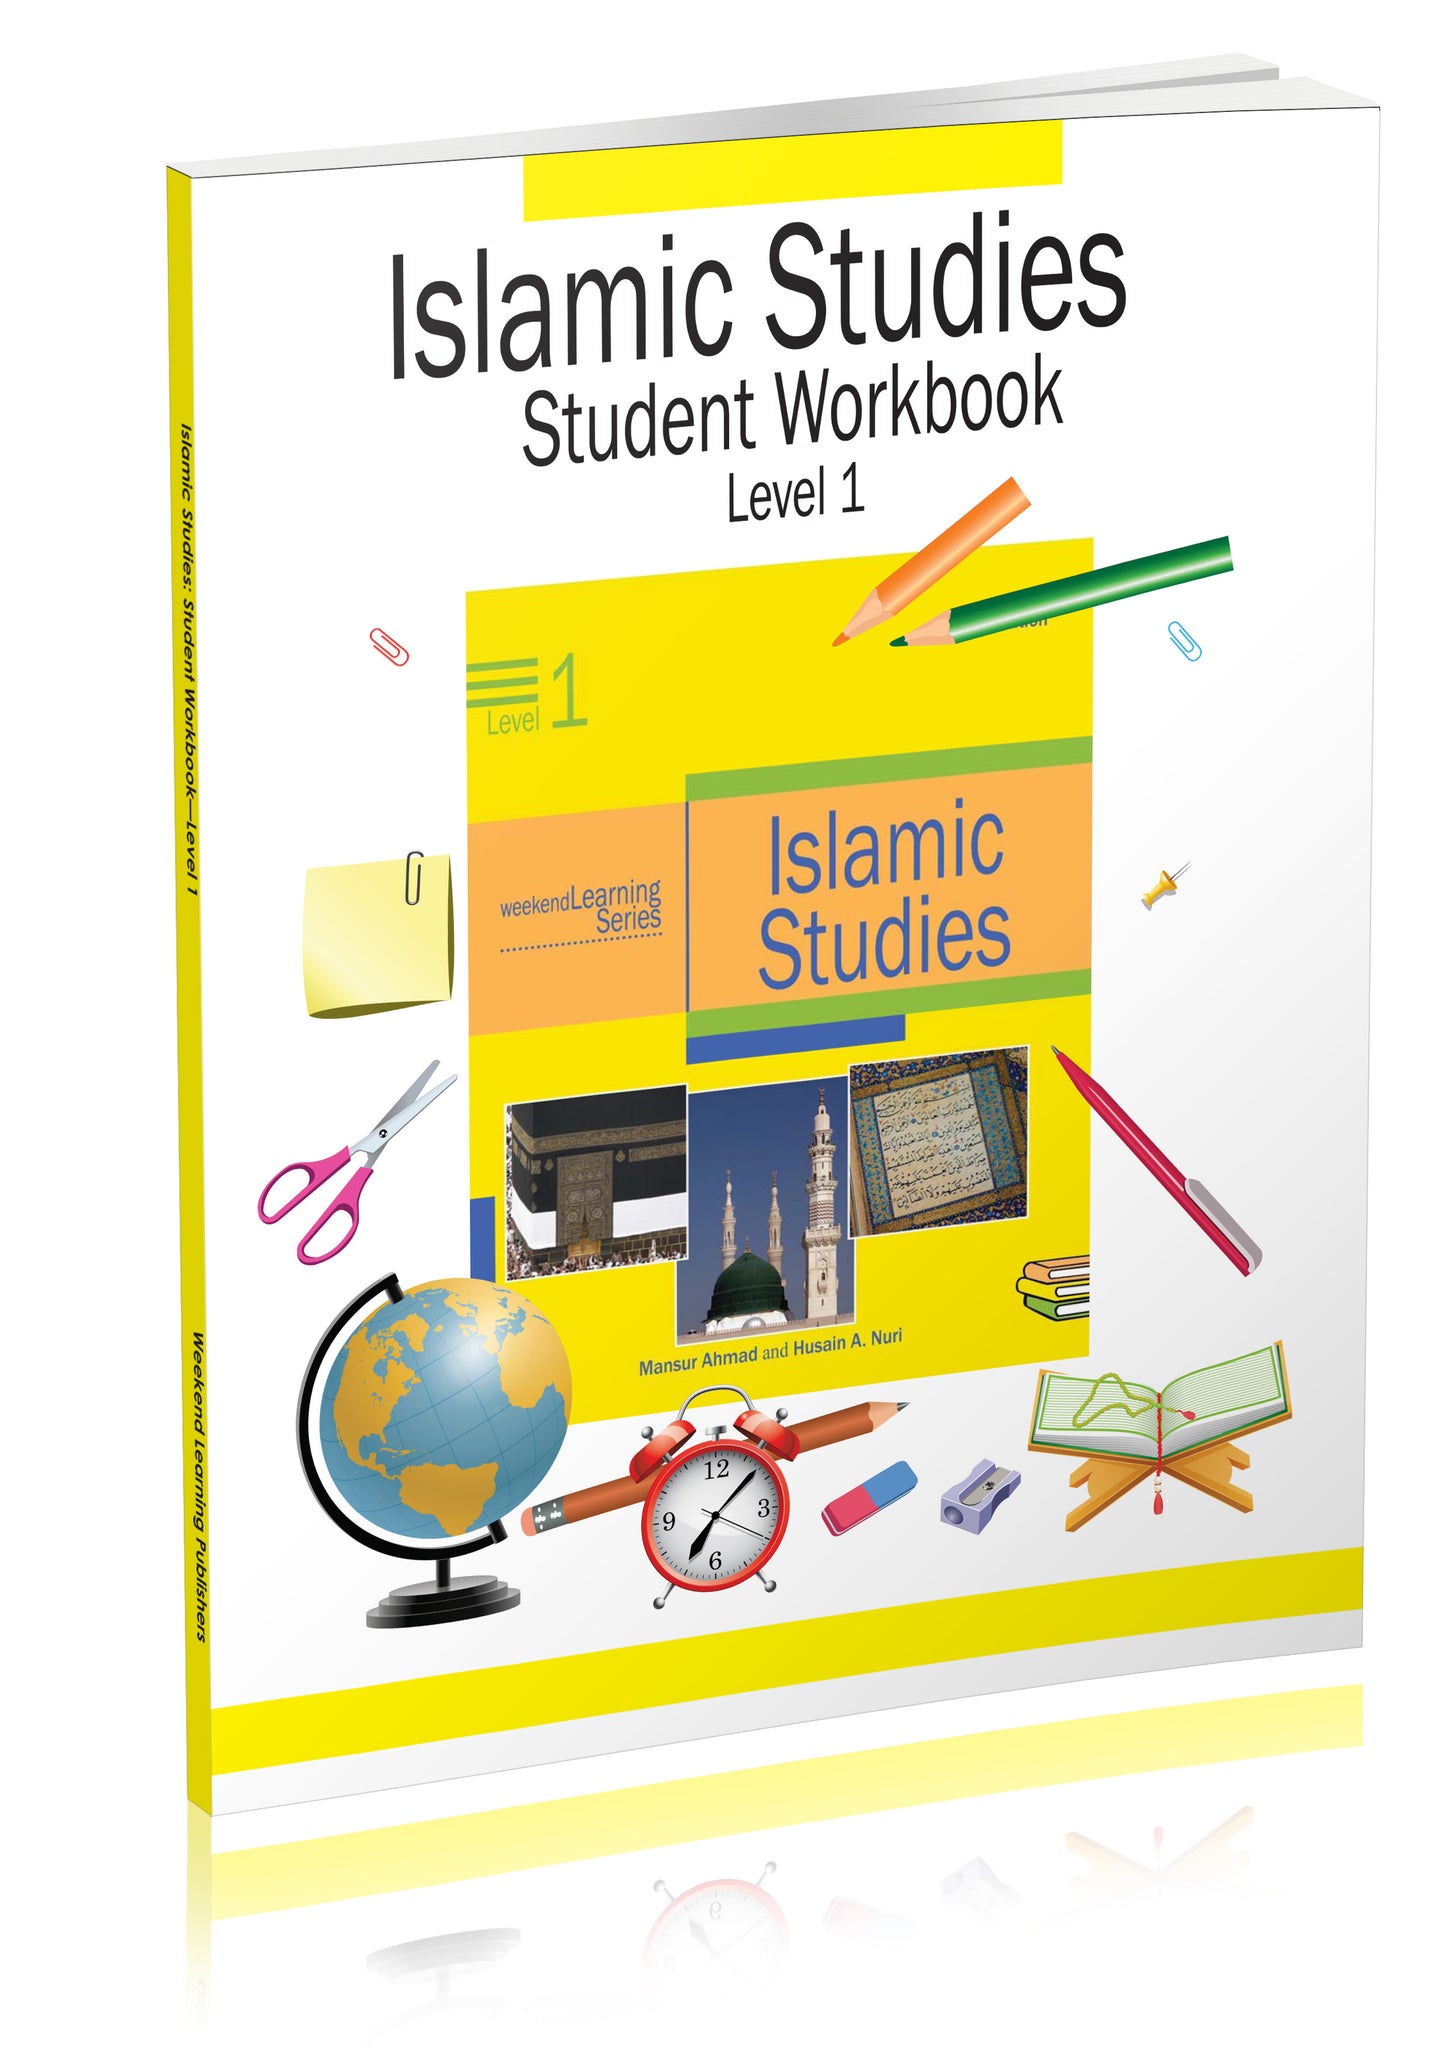 Student Workbook - Islamic Studies Level 1